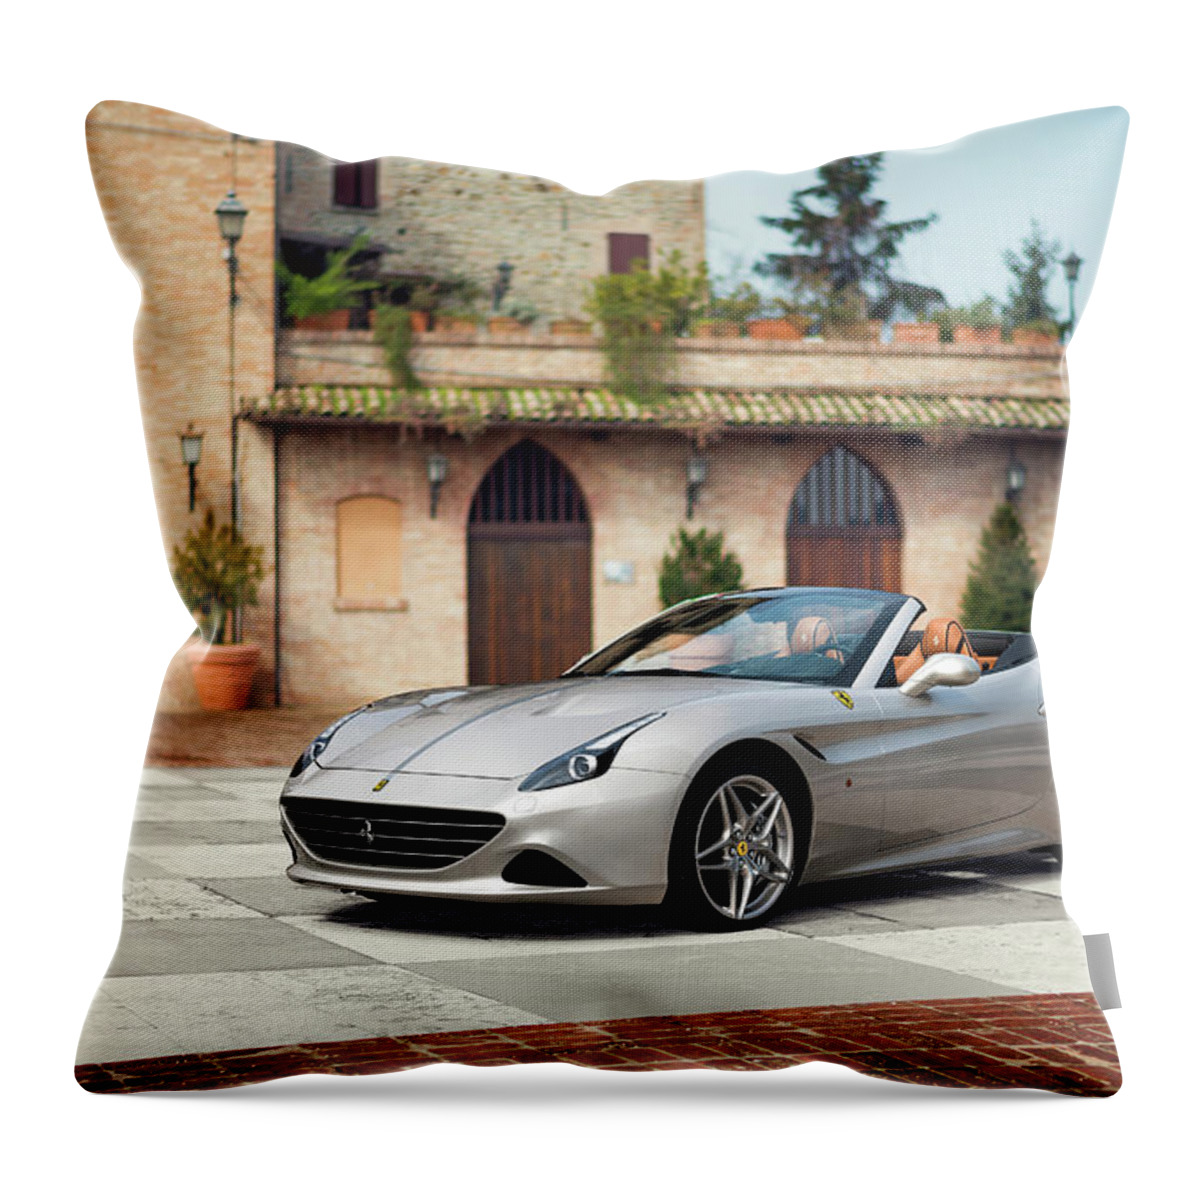 Ferrari California T Throw Pillow featuring the digital art Ferrari California T by Maye Loeser